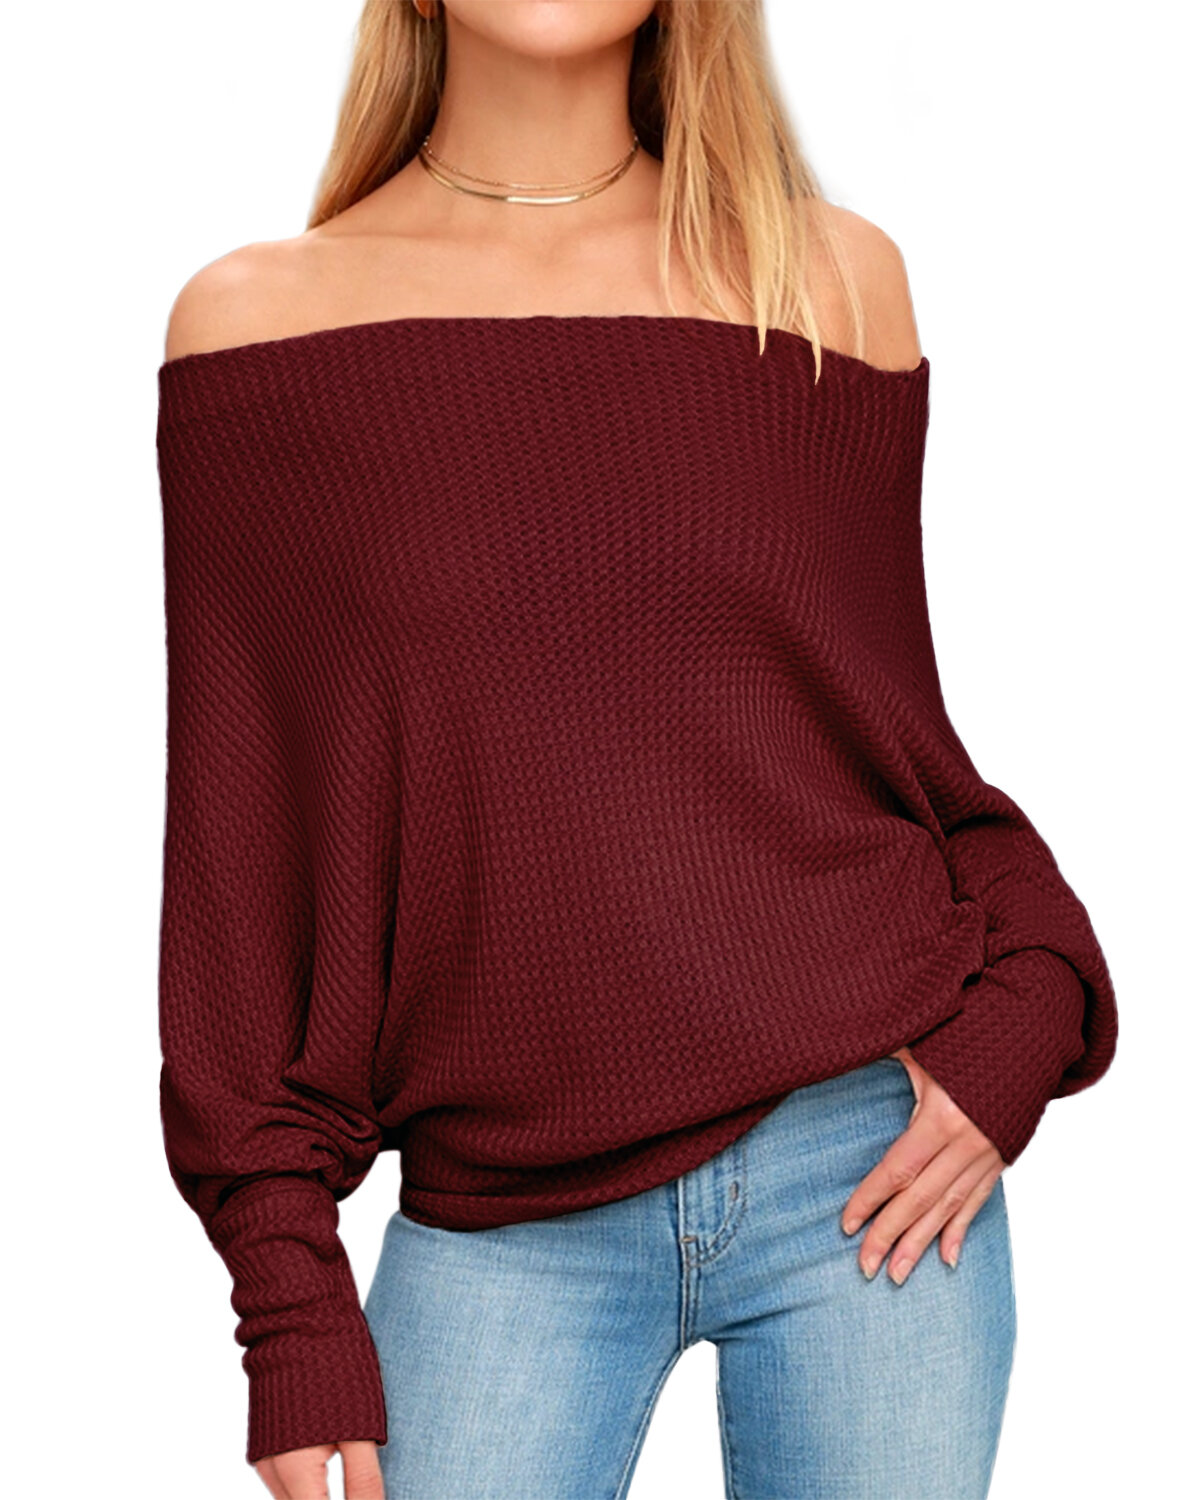 Women off shoulder knit sweaters jumper loose pullover tops Sale ...